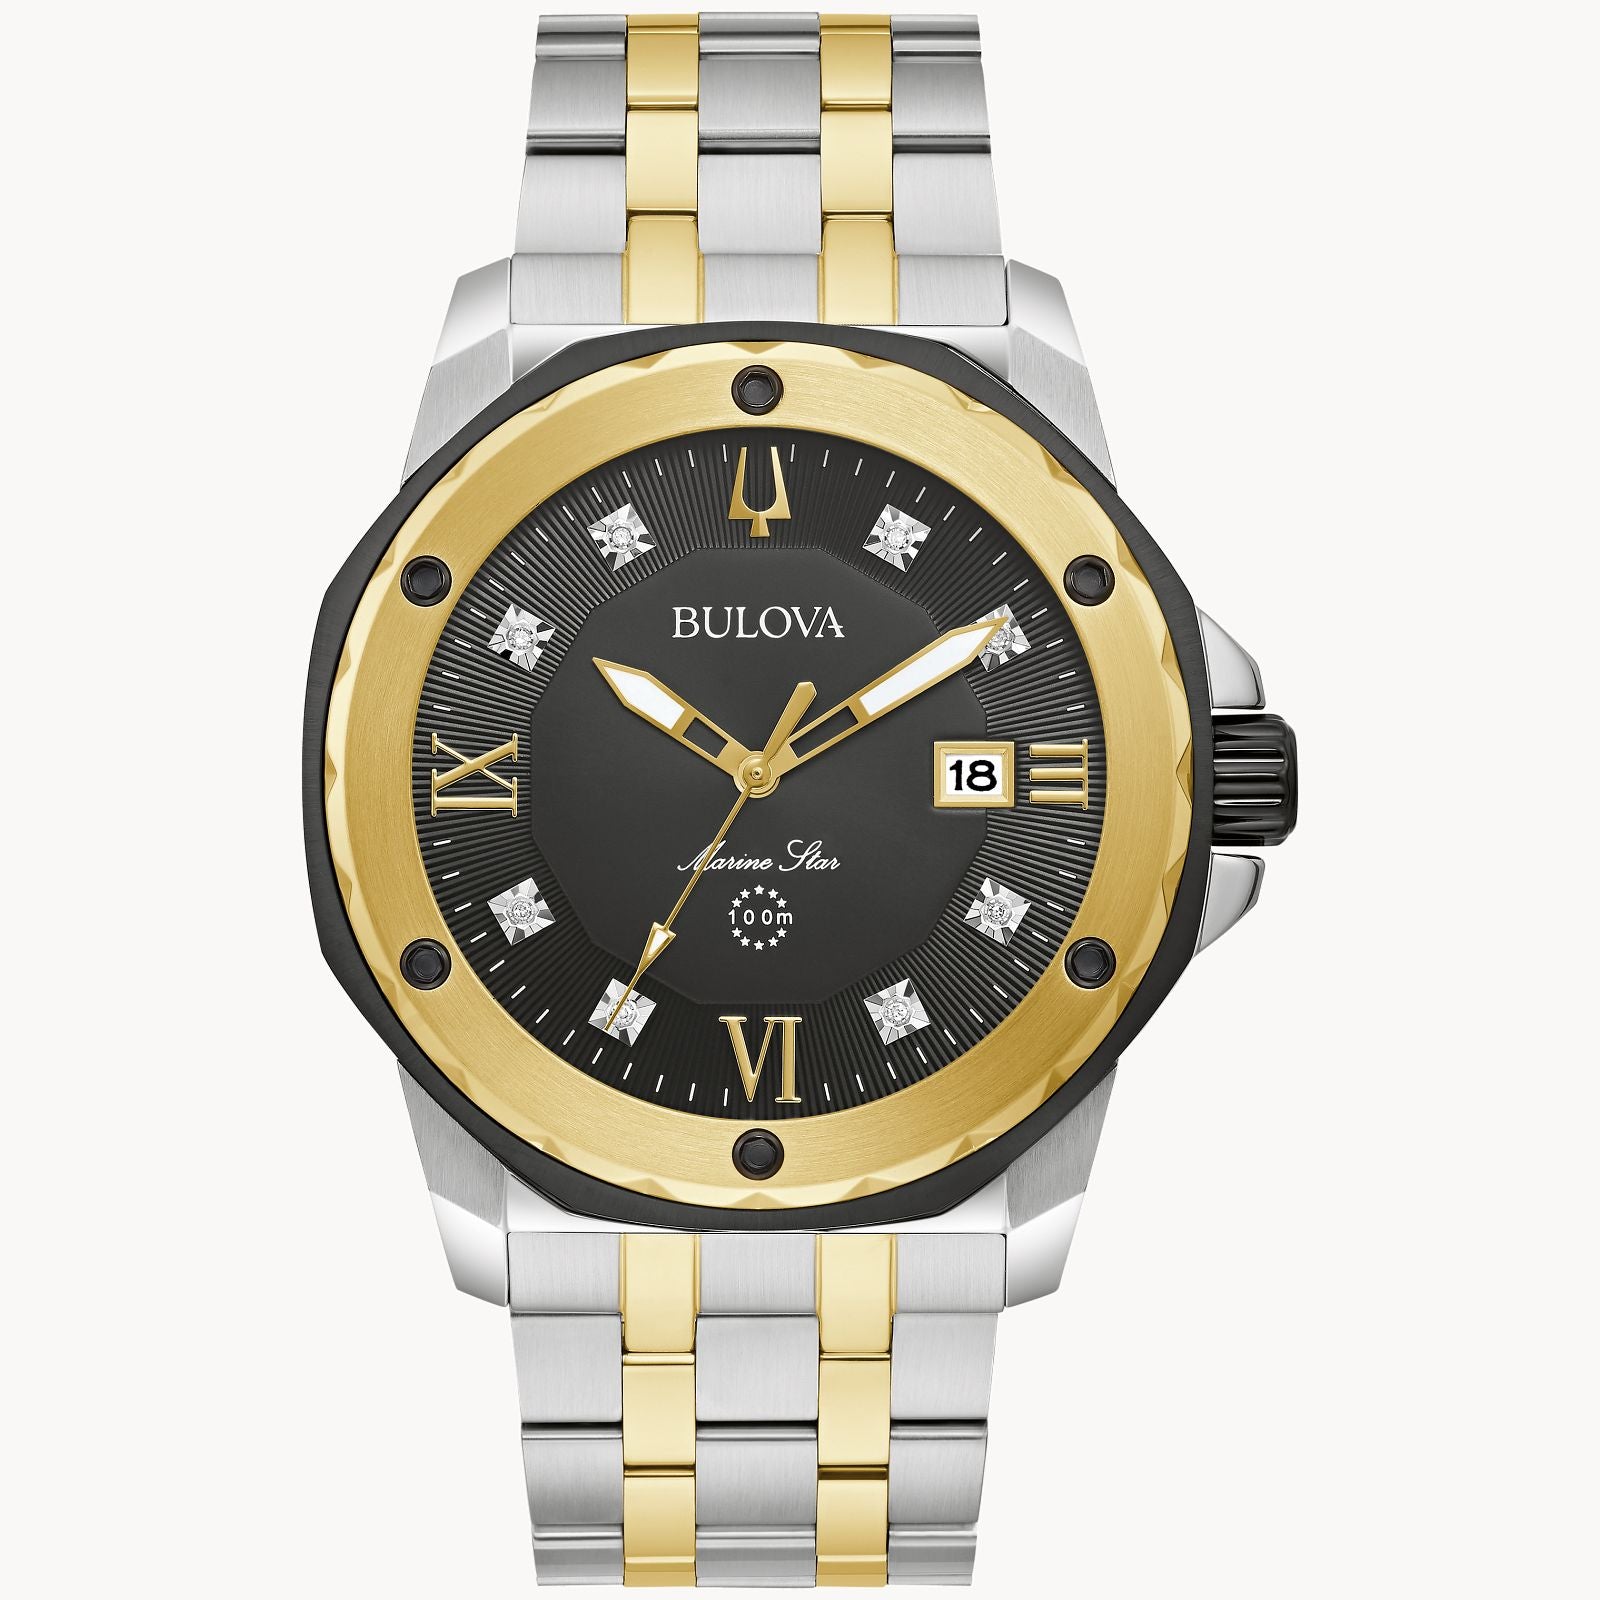 Bulova Marine Star Series A Timepiece